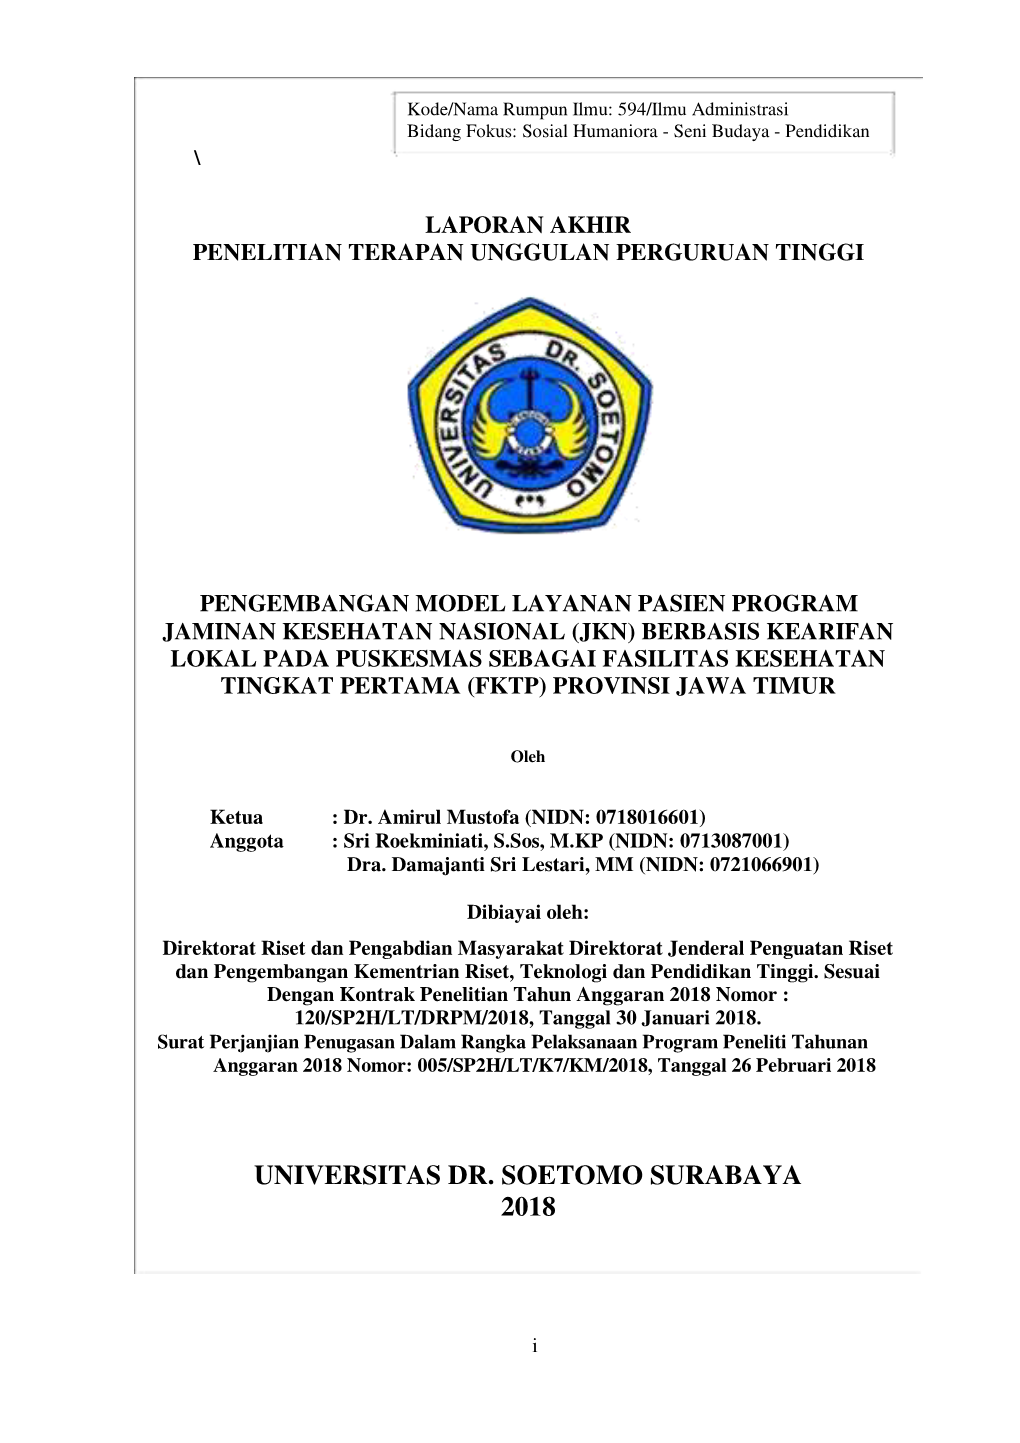 Universitas Dr. Soetomo Surabaya 2018